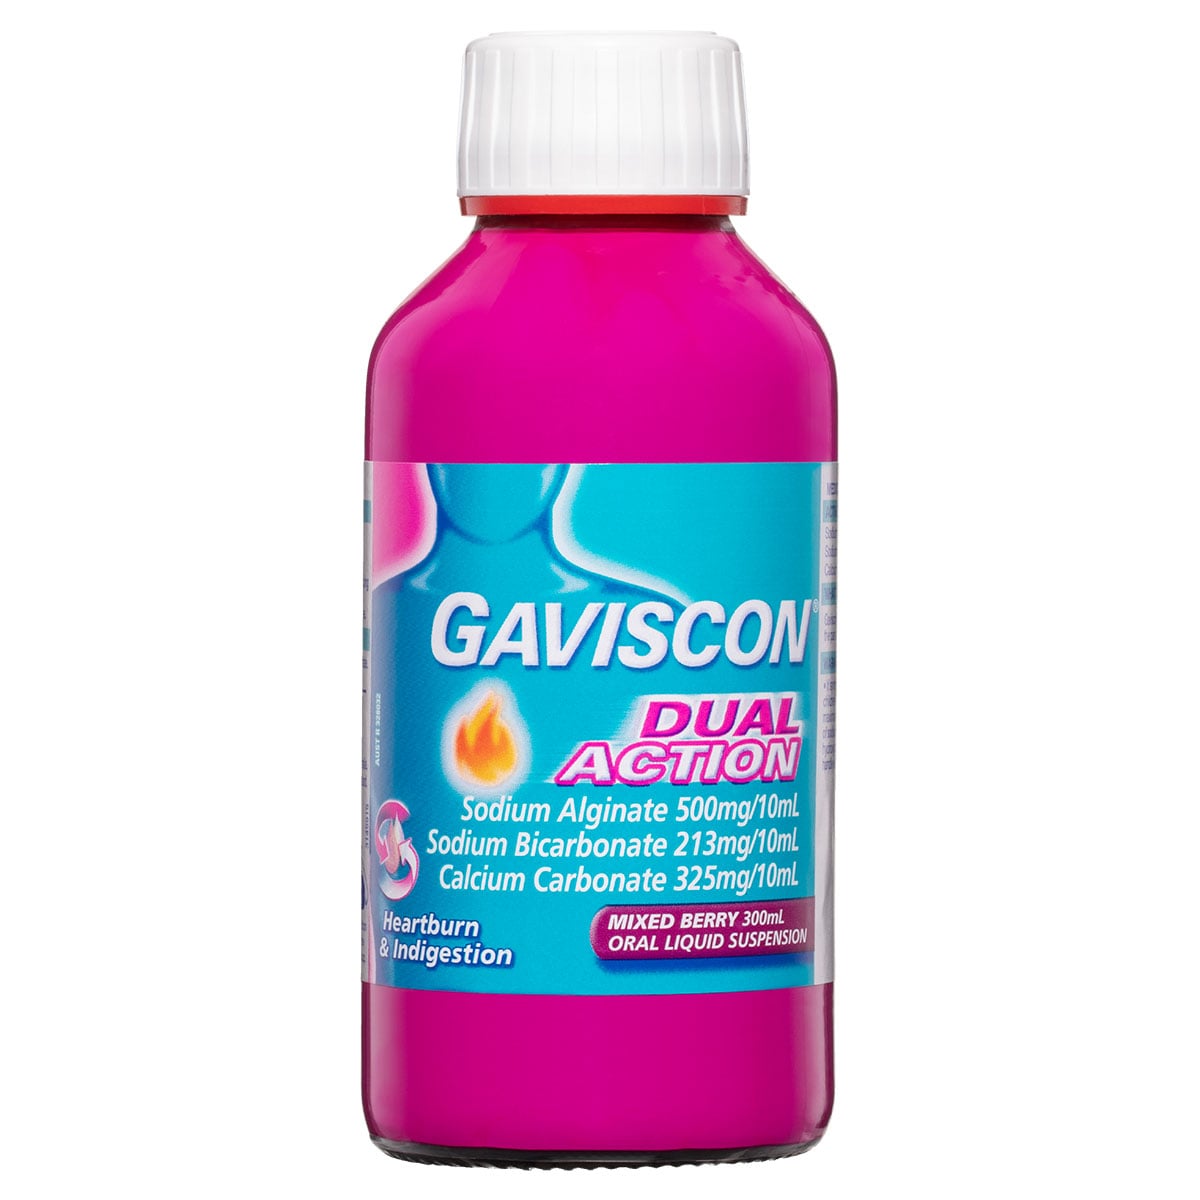 Gaviscon Dual Action Heartburn & Indigestion Mixed Berry 300ml